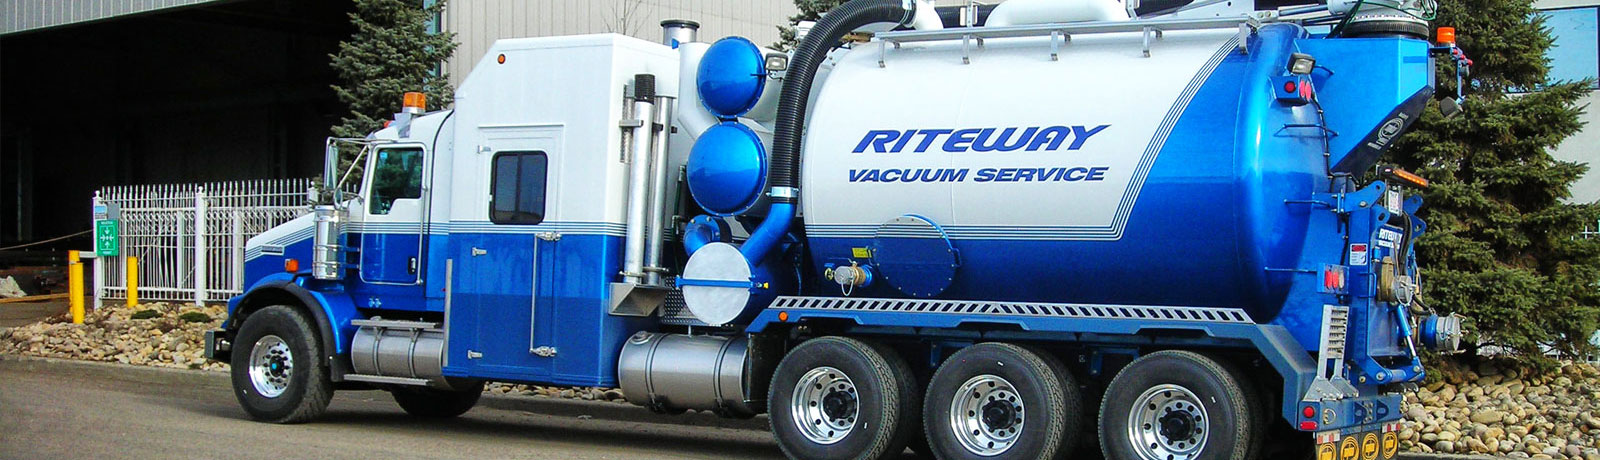 image of hydrovac truck riteway vacuum service